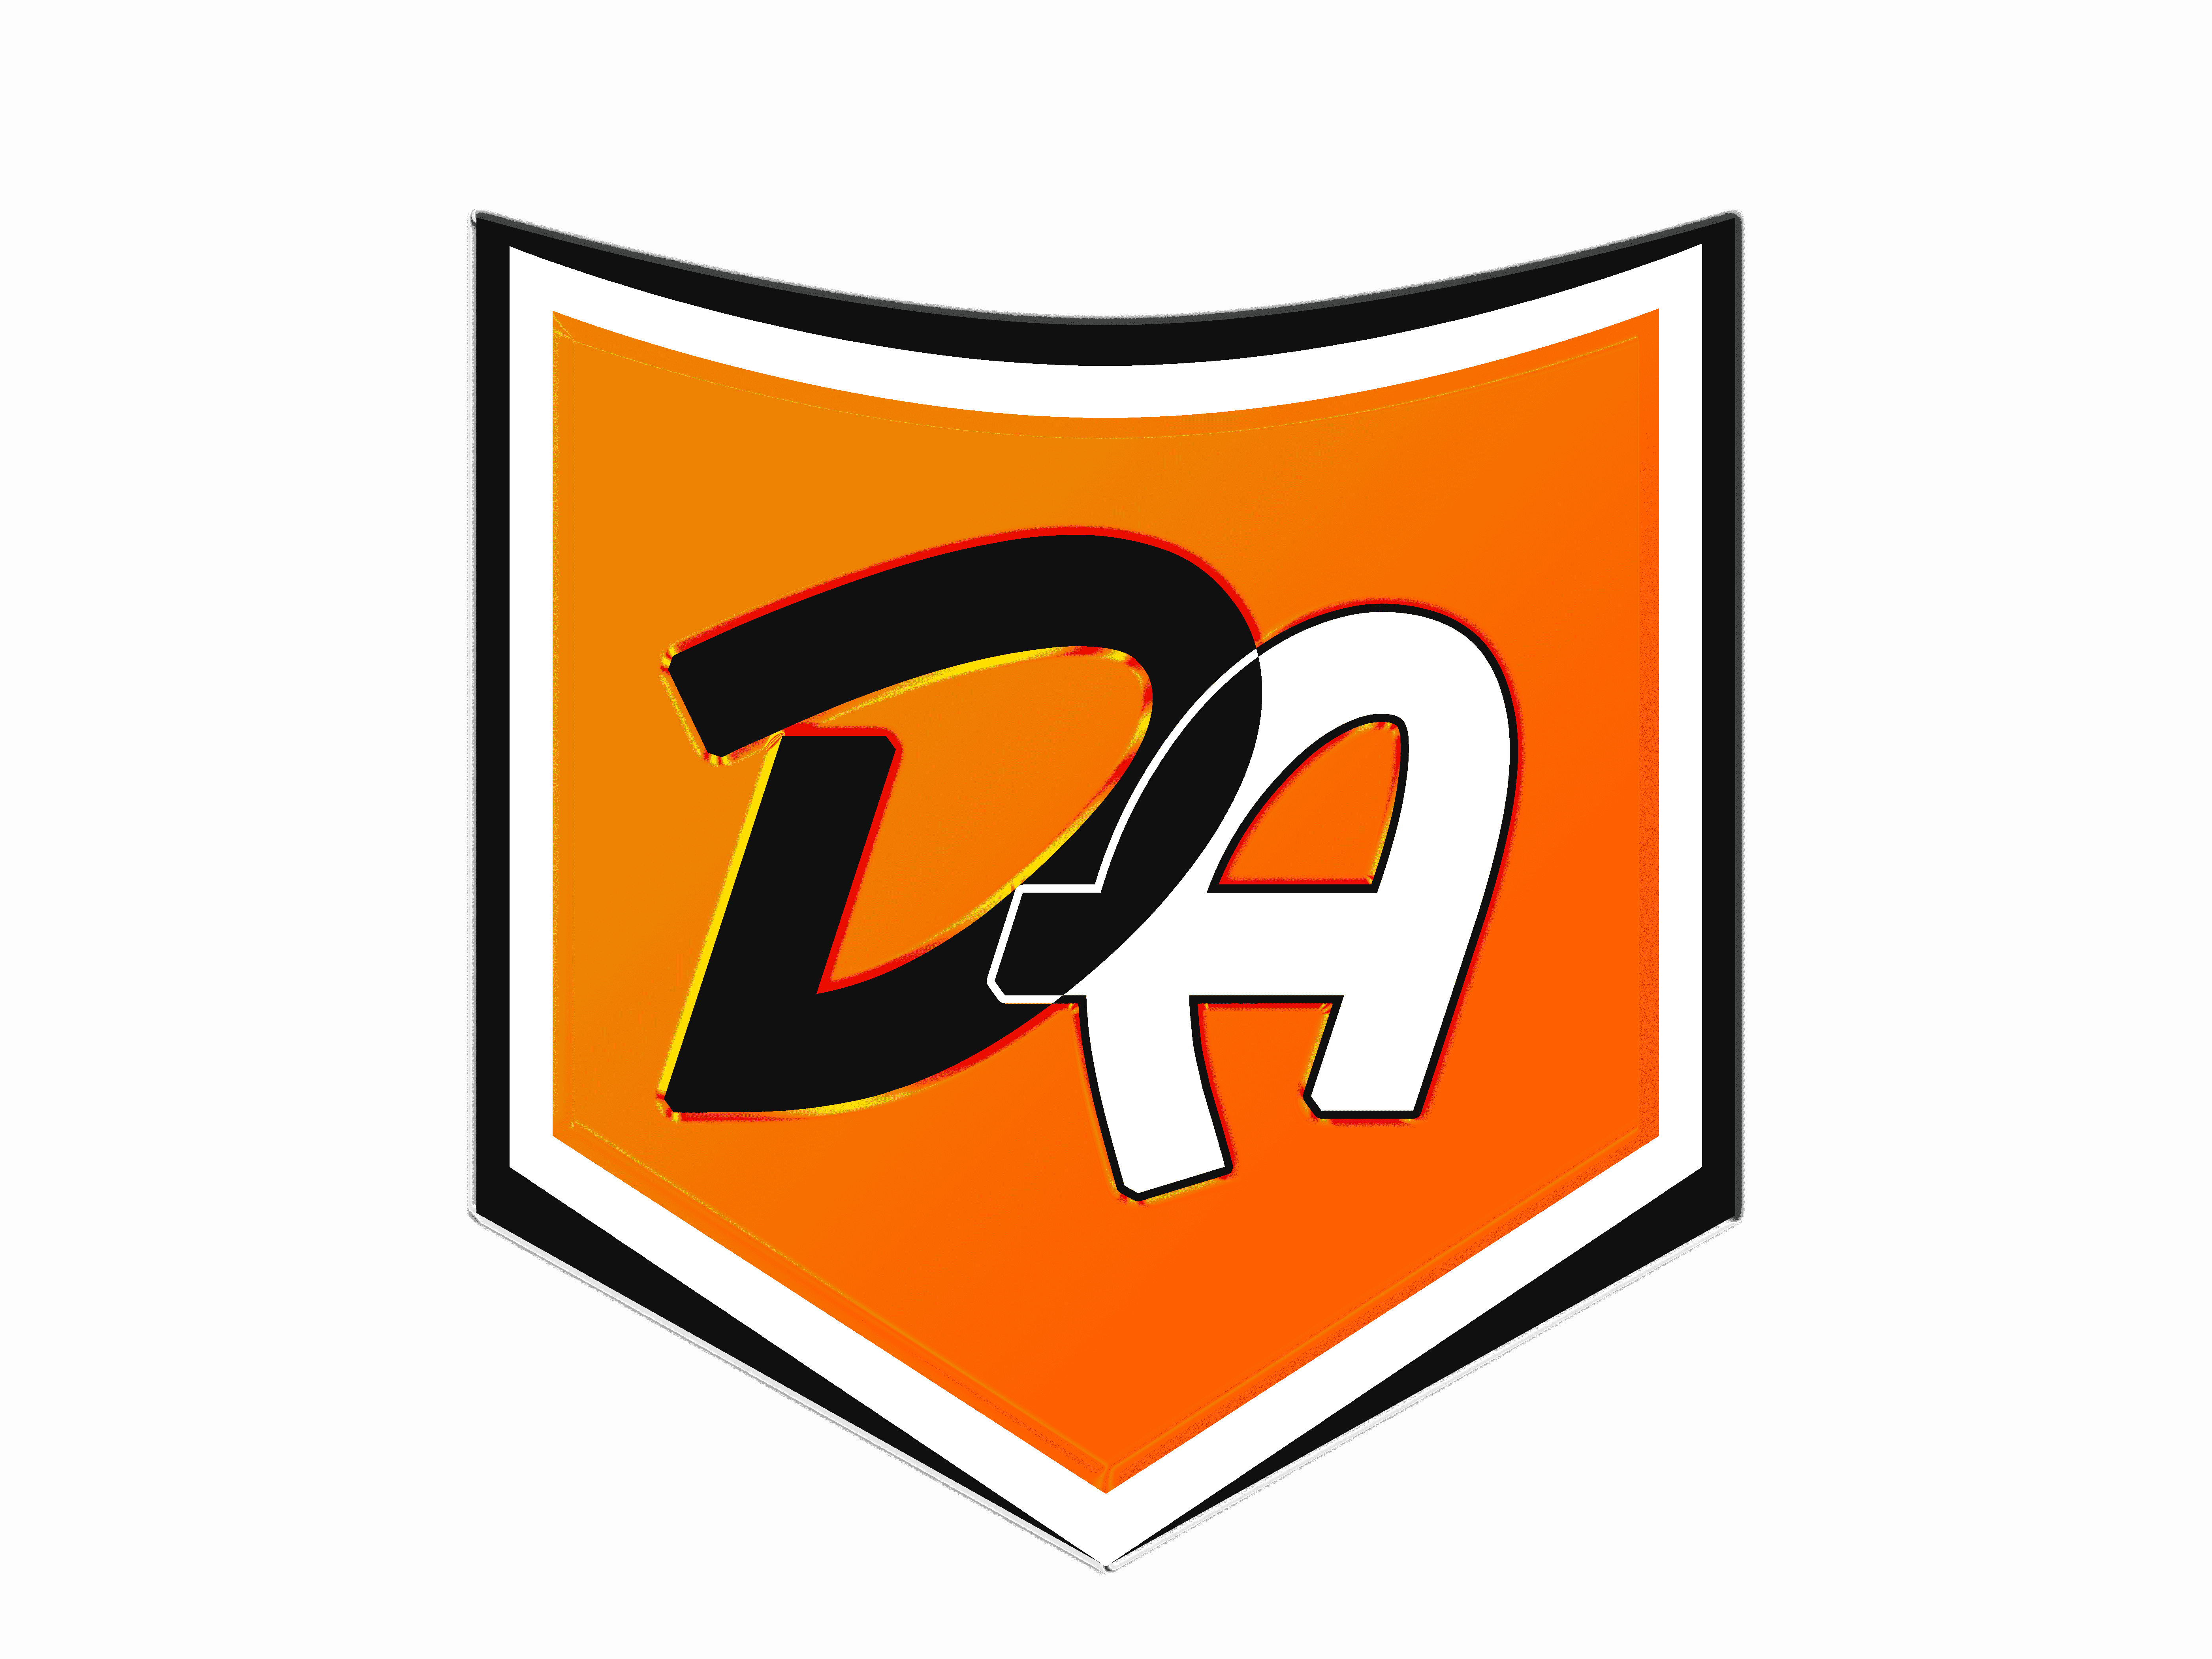 Davidayo: About US logo